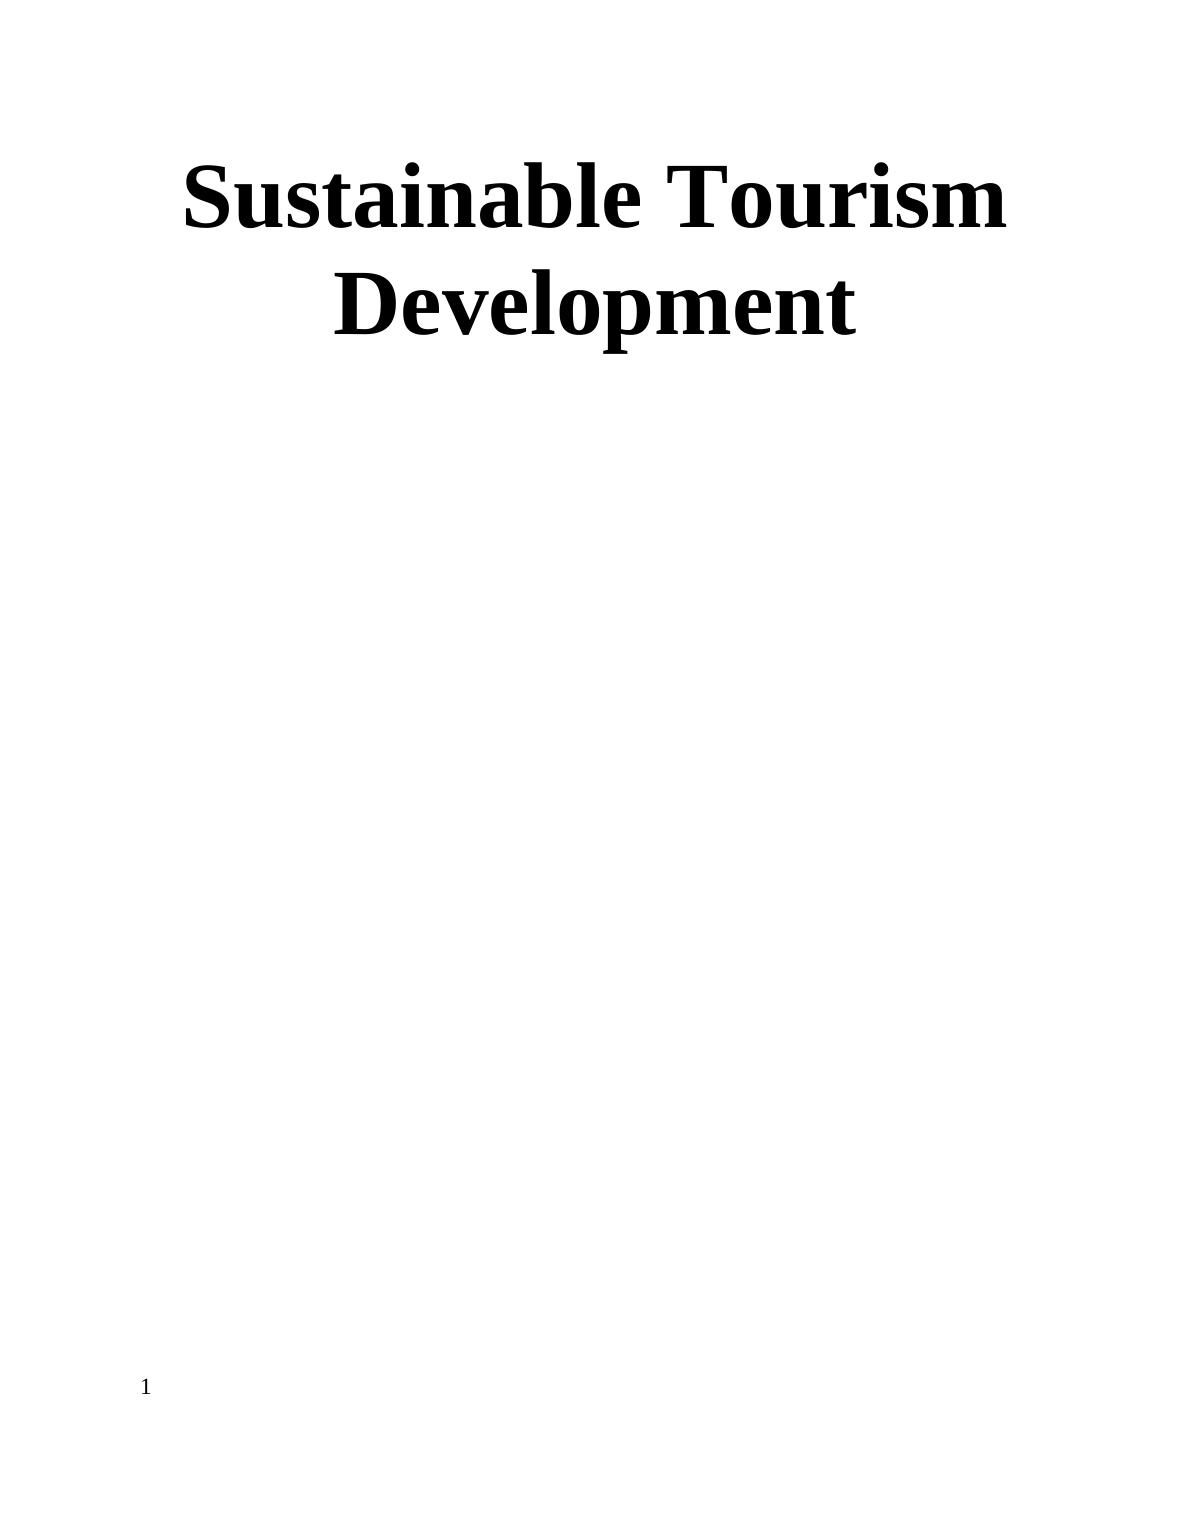 Inasustainable tourism development INTRODUCTION 3 Task 13 1.13 1.24_1